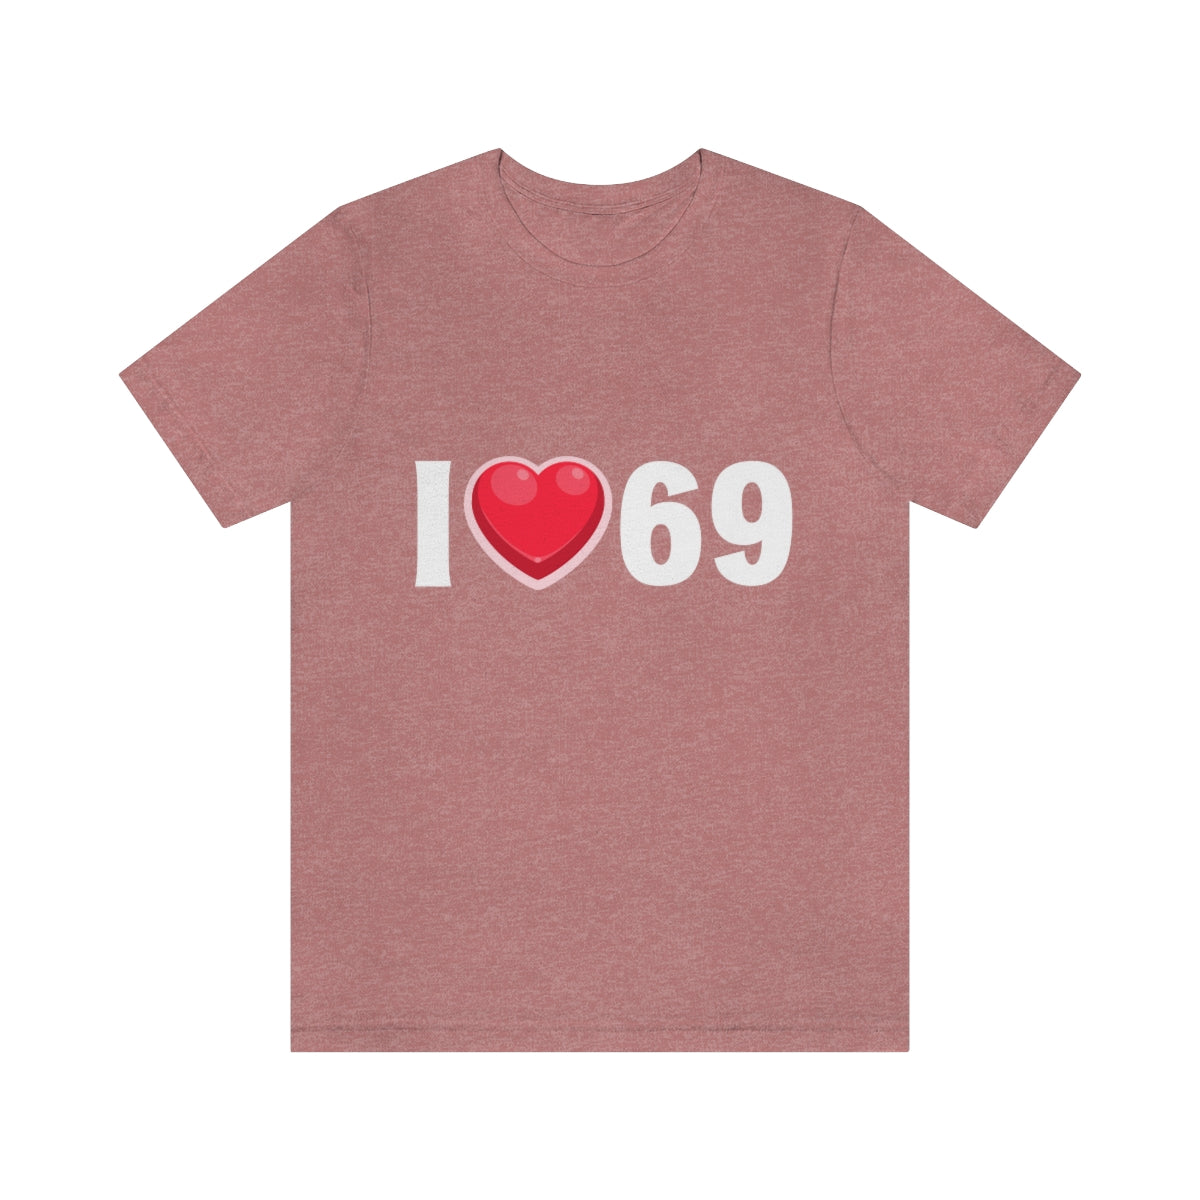 I Heart 69 2 - Unisex T-Shirt